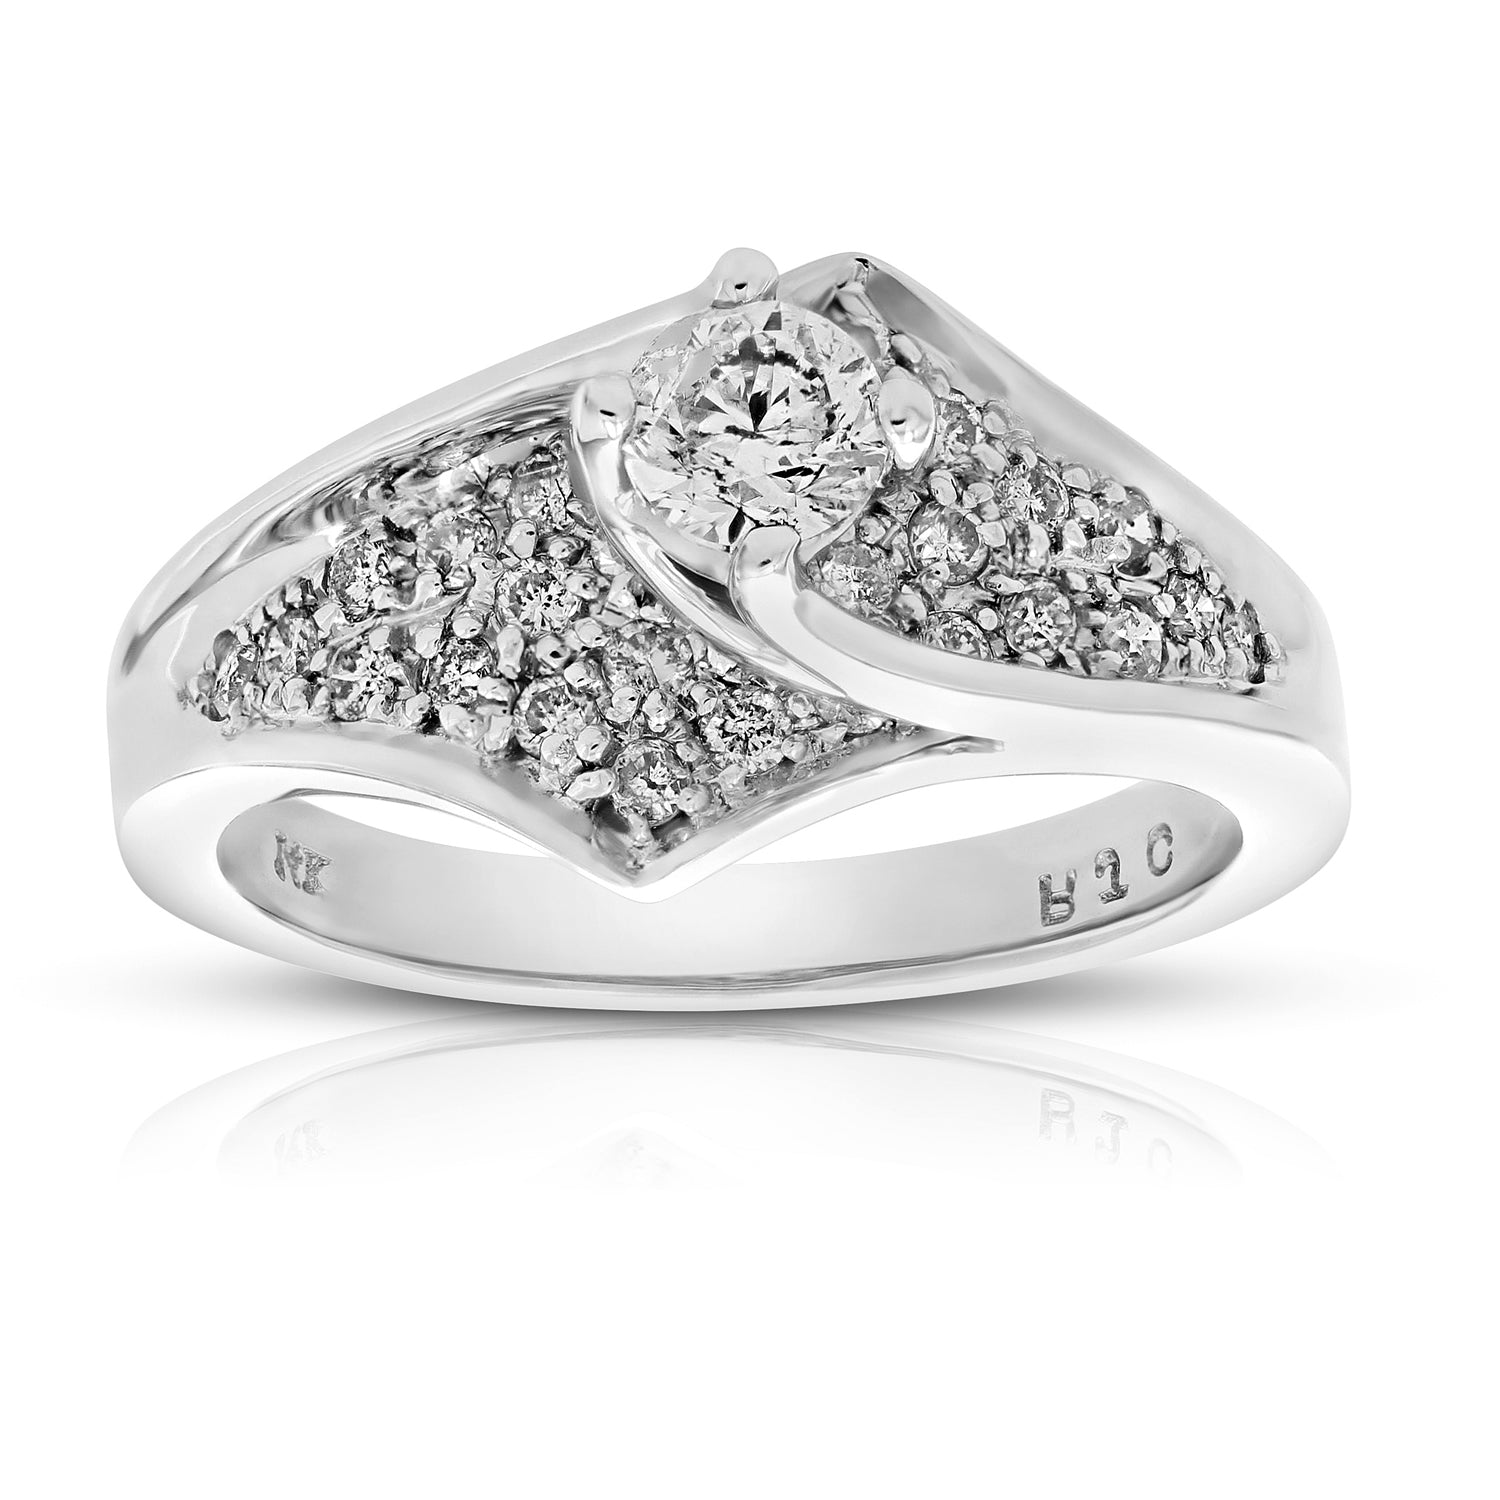 0.80 cttw Diamond Engagement Ring 14K White Gold Wedding Bridal Size 7